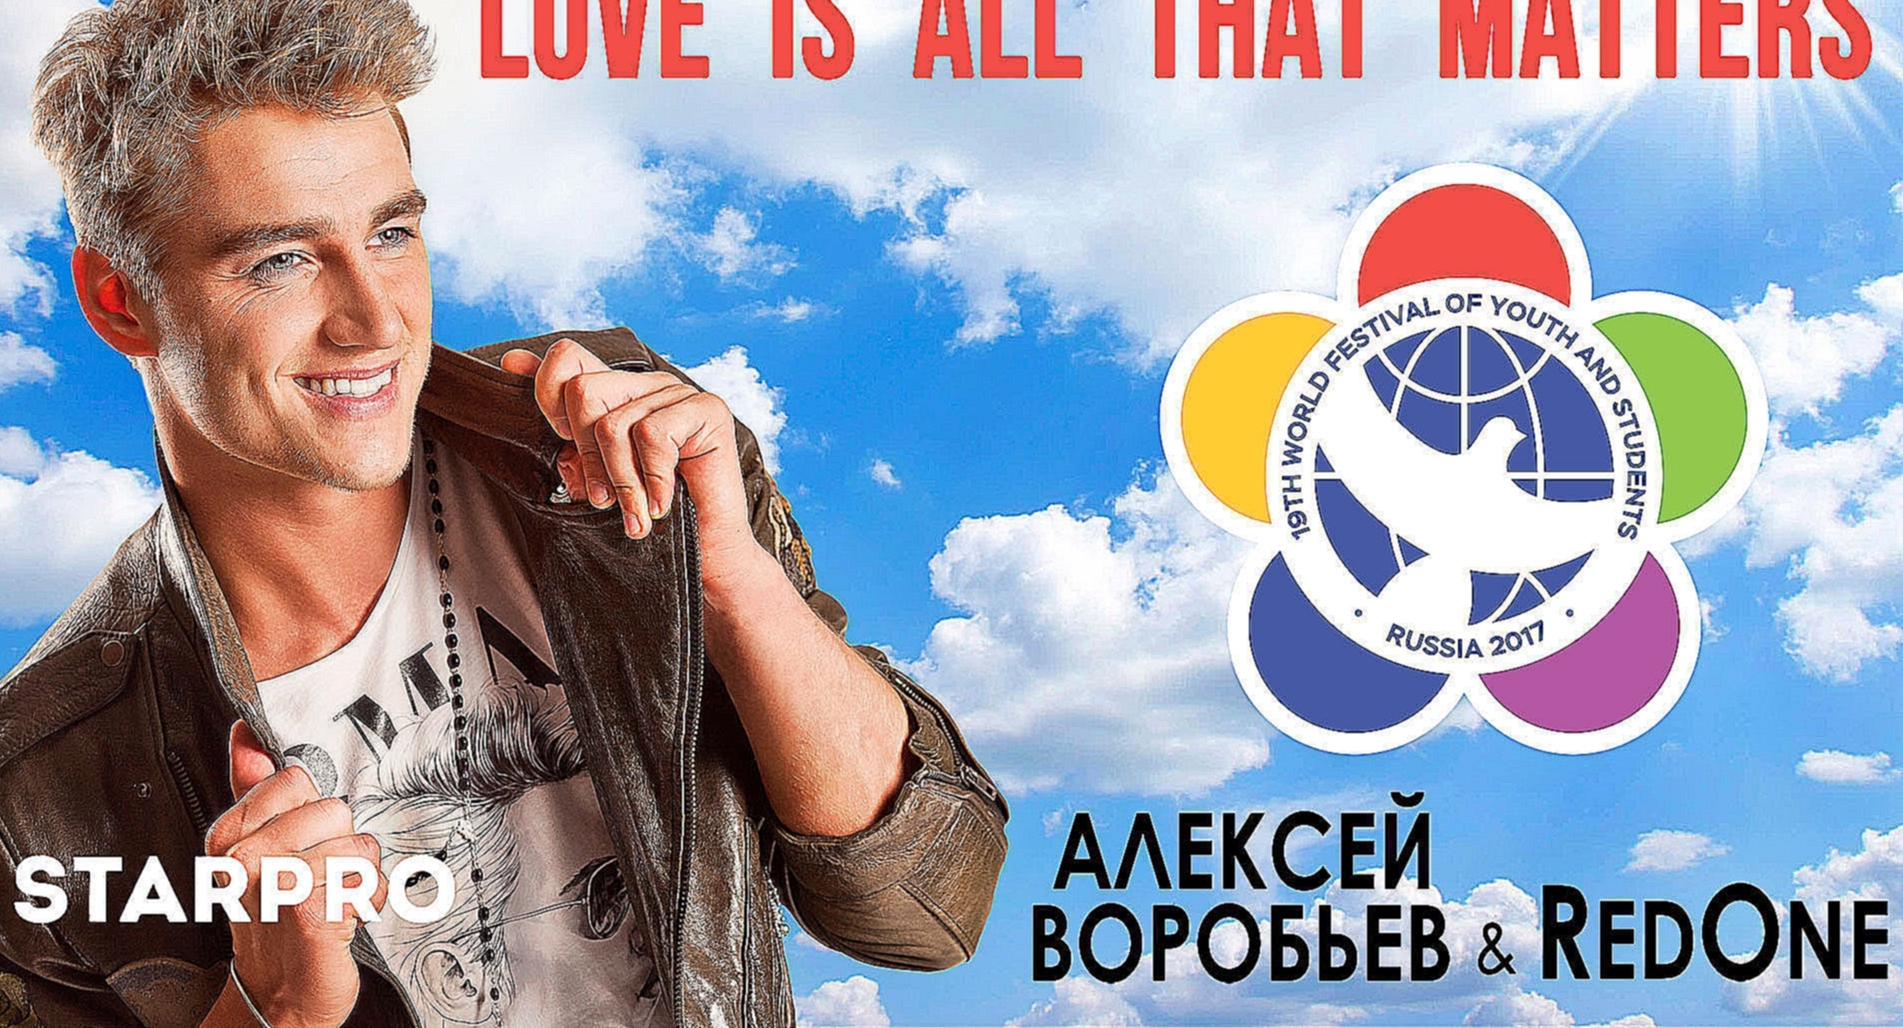 Алексей Воробьев feat. RedOne feat. Путин - Love is all that matters Гимн ВФМС 2017 - видеоклип на песню